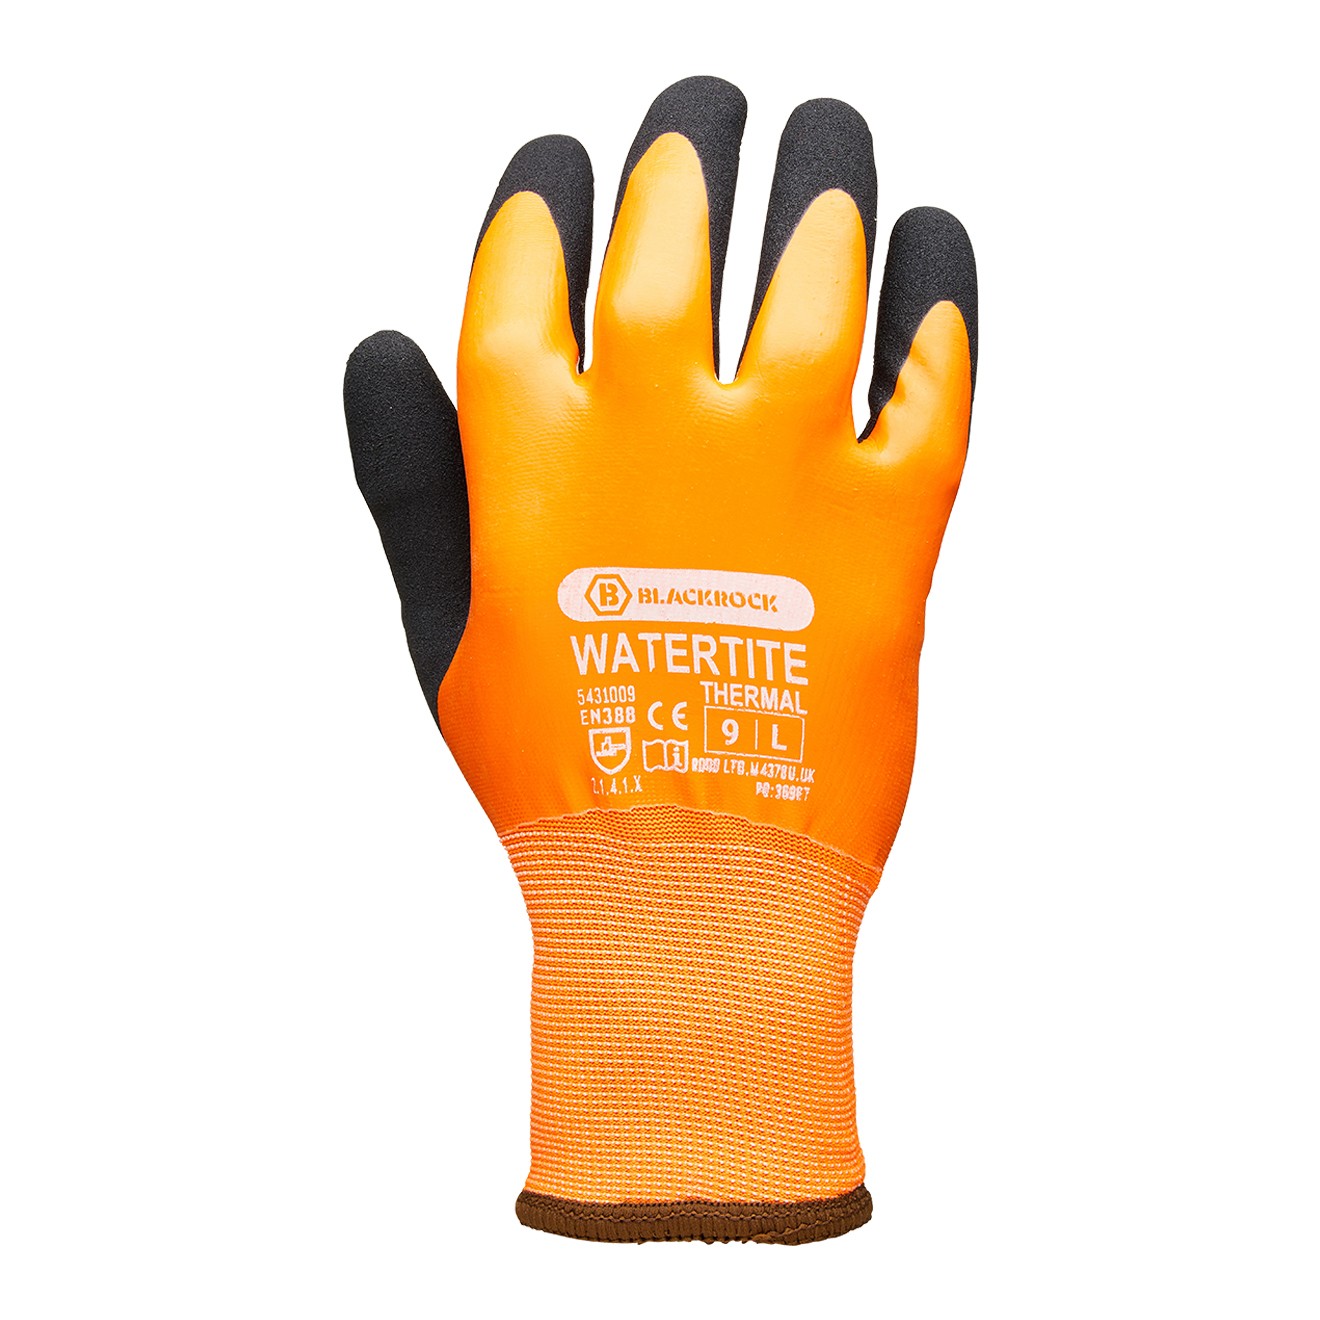 Watertite Thermal Work Glove